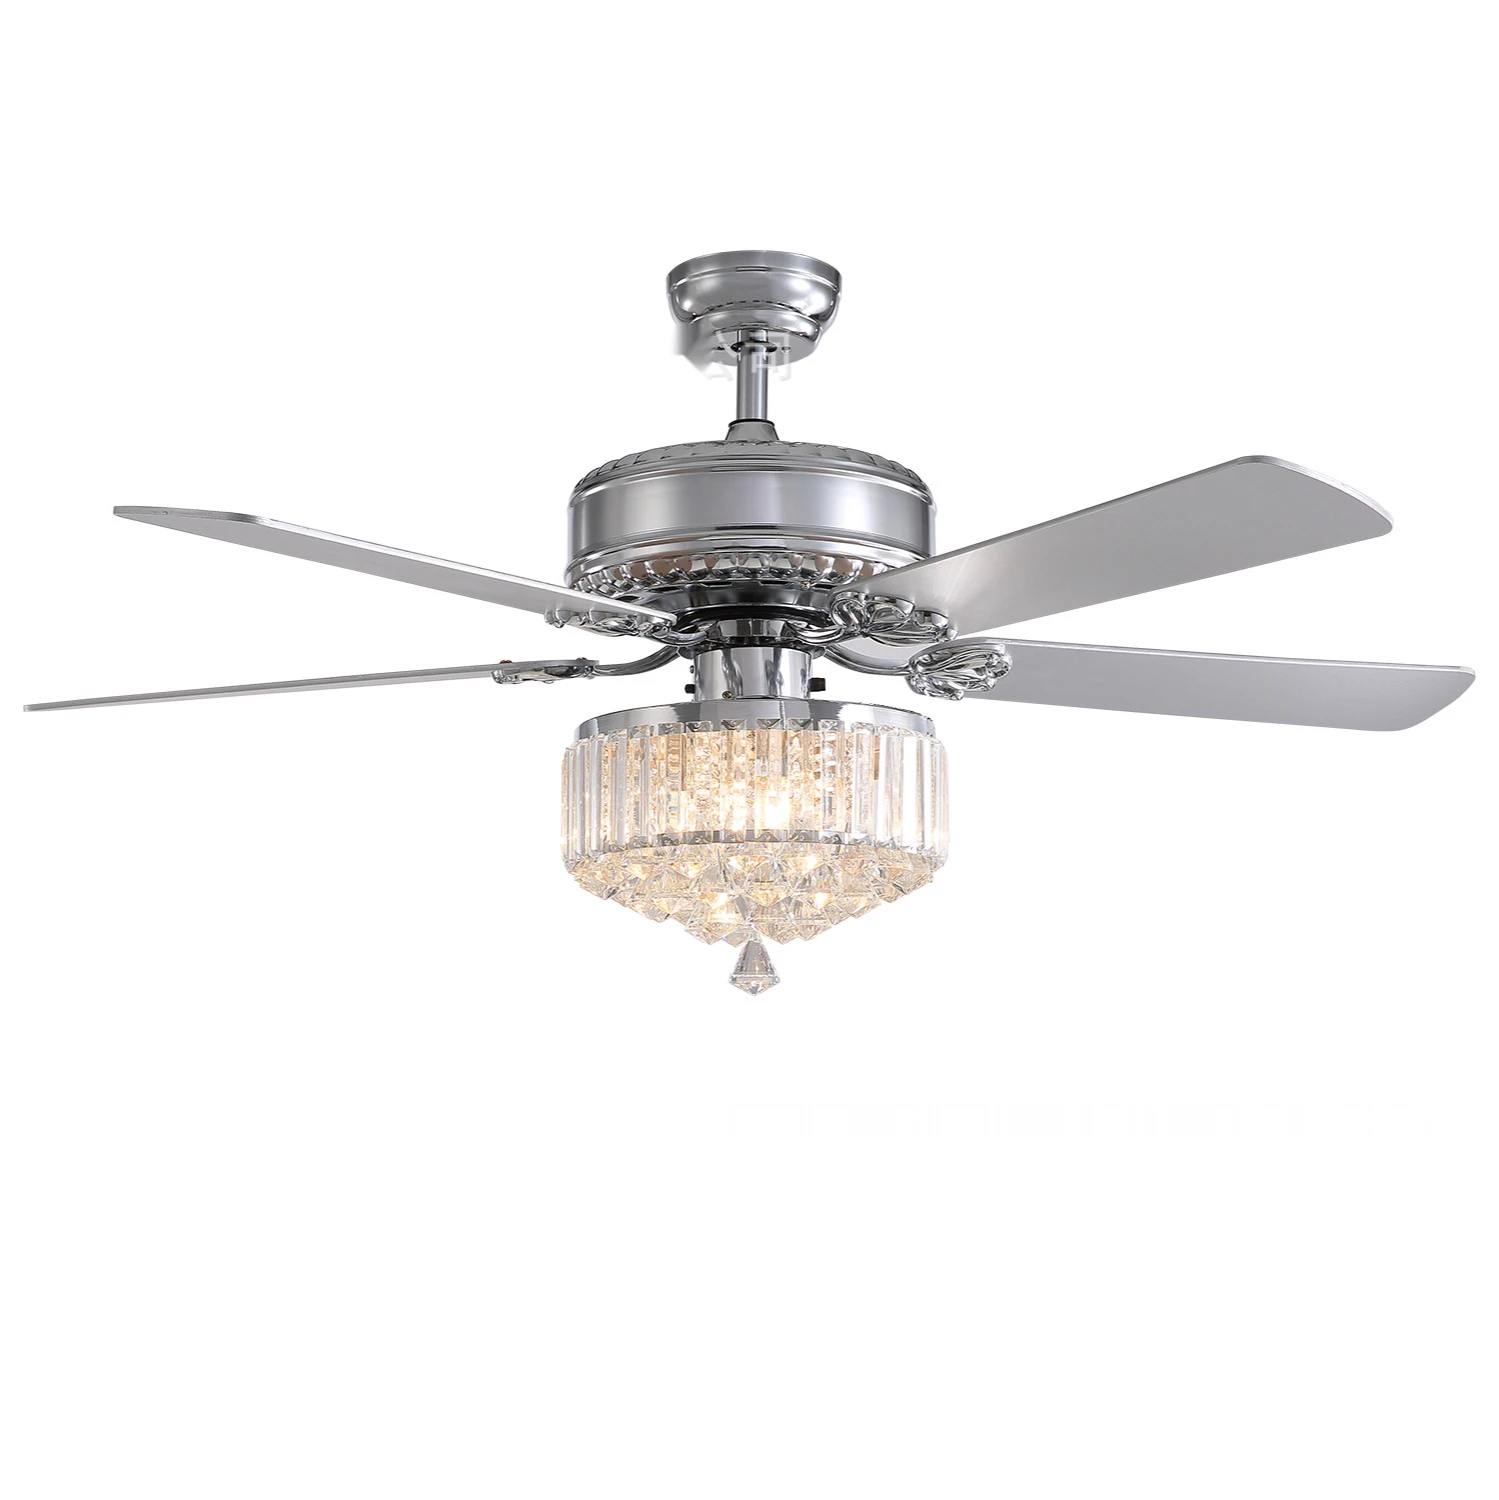 Mass Production Low Watt Energy Saving Ceiling Fan Remote Control Crystal Lighting Changeable Fan Spare Part